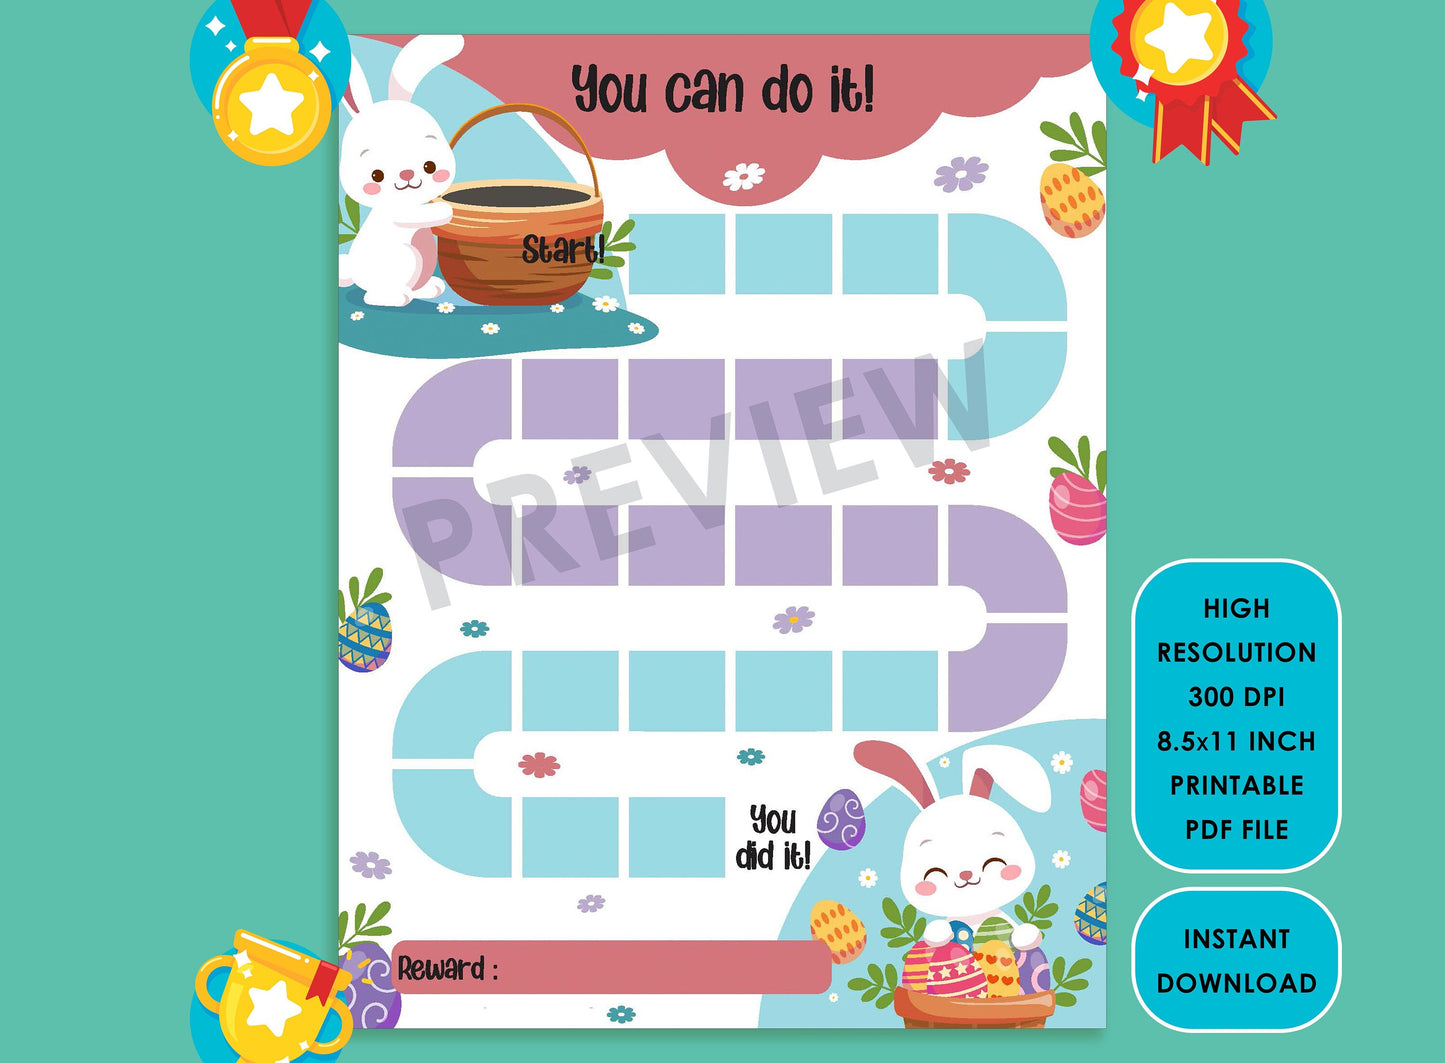 Printable Easter Bunny Reward Chart, Easter Egg Hunt Chores Chart, Behavior Charts Kor Kids, Holiday Incentive Chart Teaching Resources